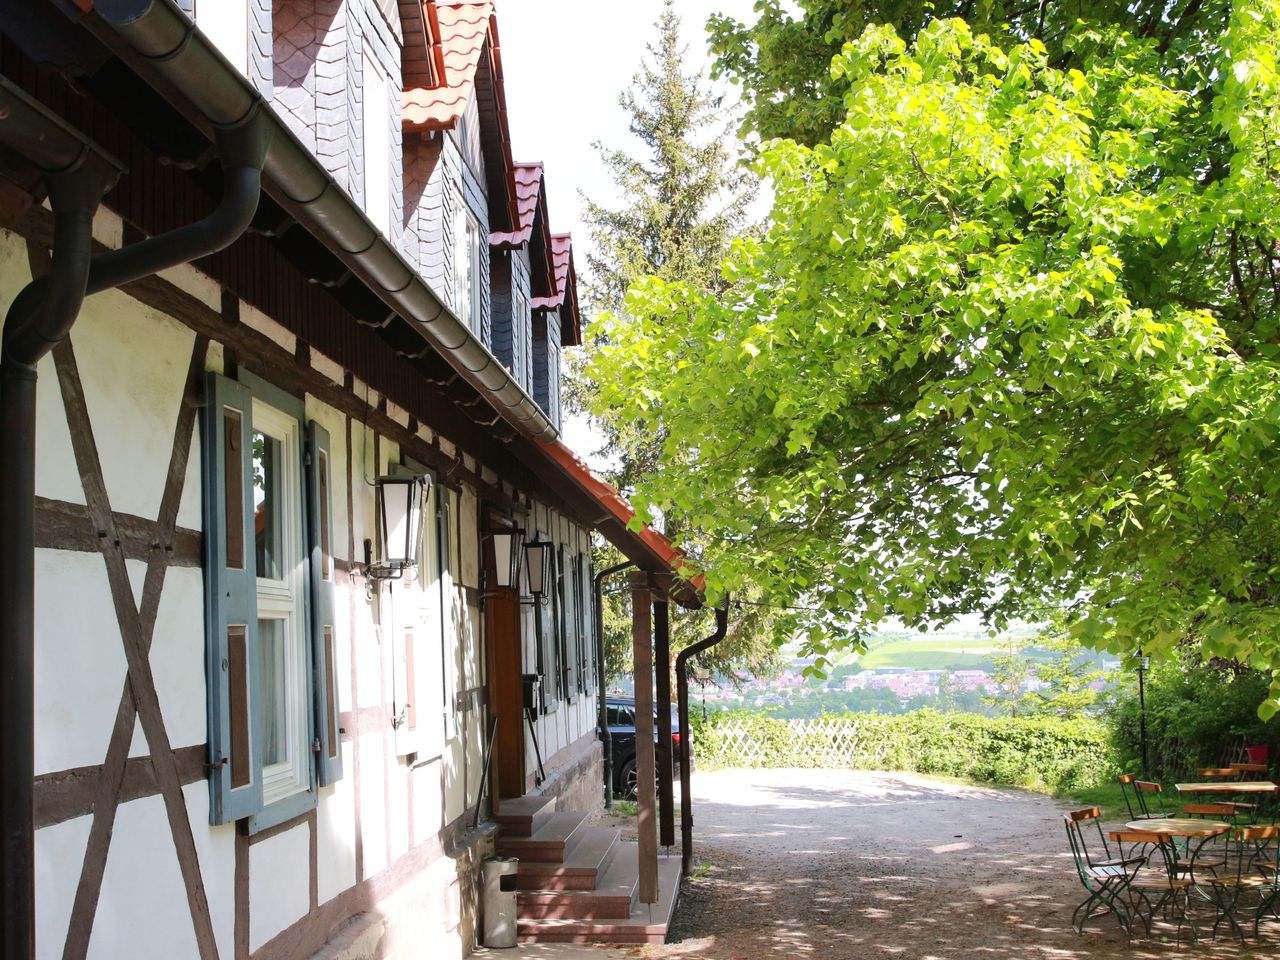 5 Nächte Tiny House Hotel in Mitteldeutschland